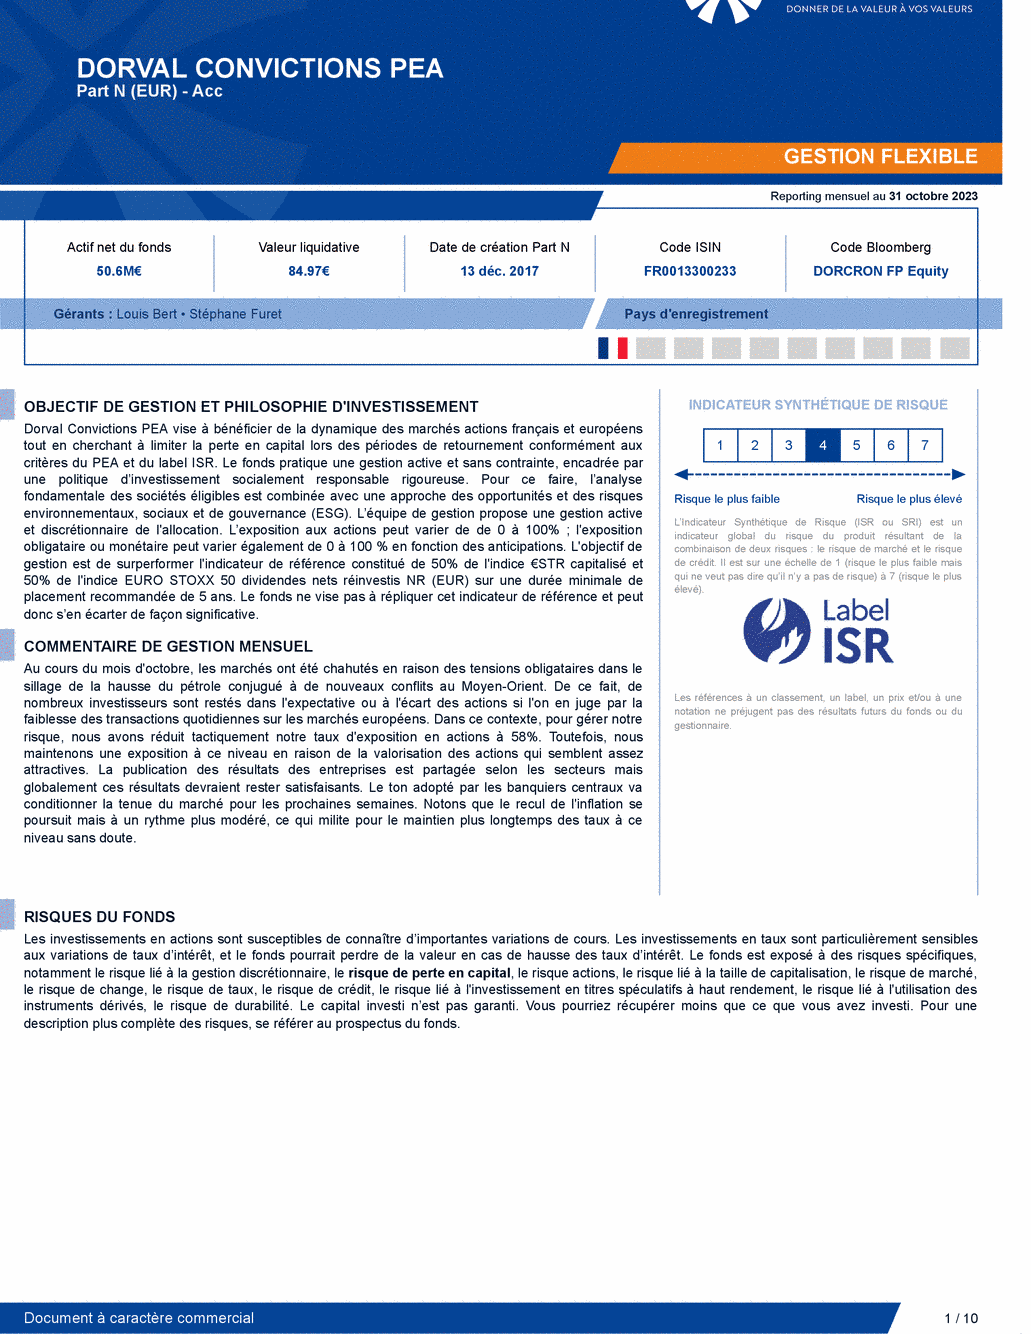 Reporting DORVAL CONVICTIONS PEA Part N - 31/10/2023 - Français